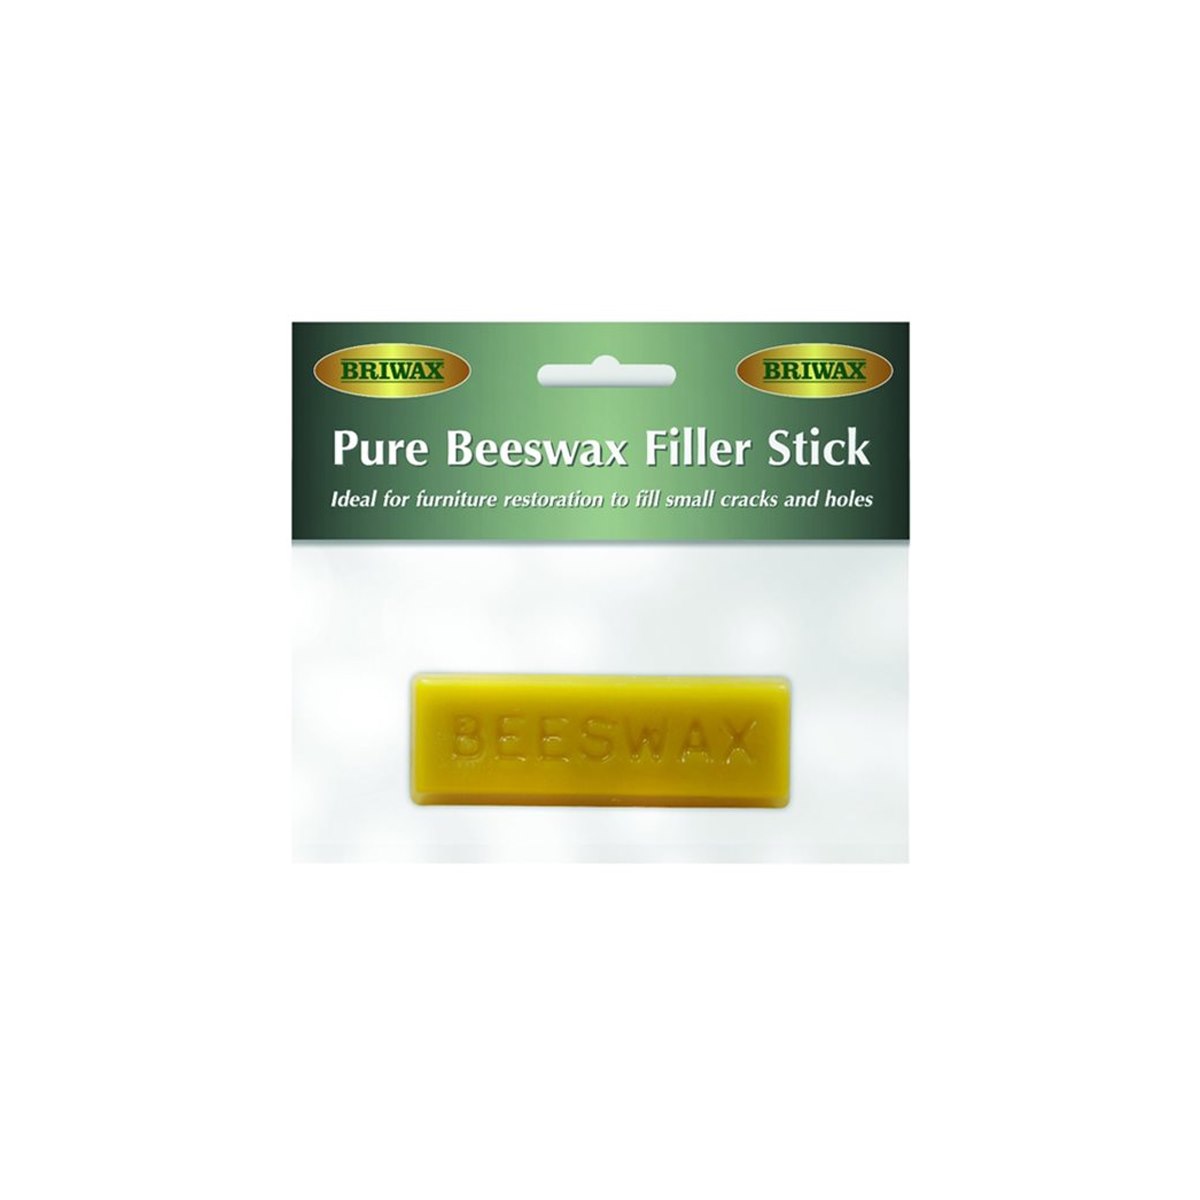 Briwax Pure Beeswax Filler Stick